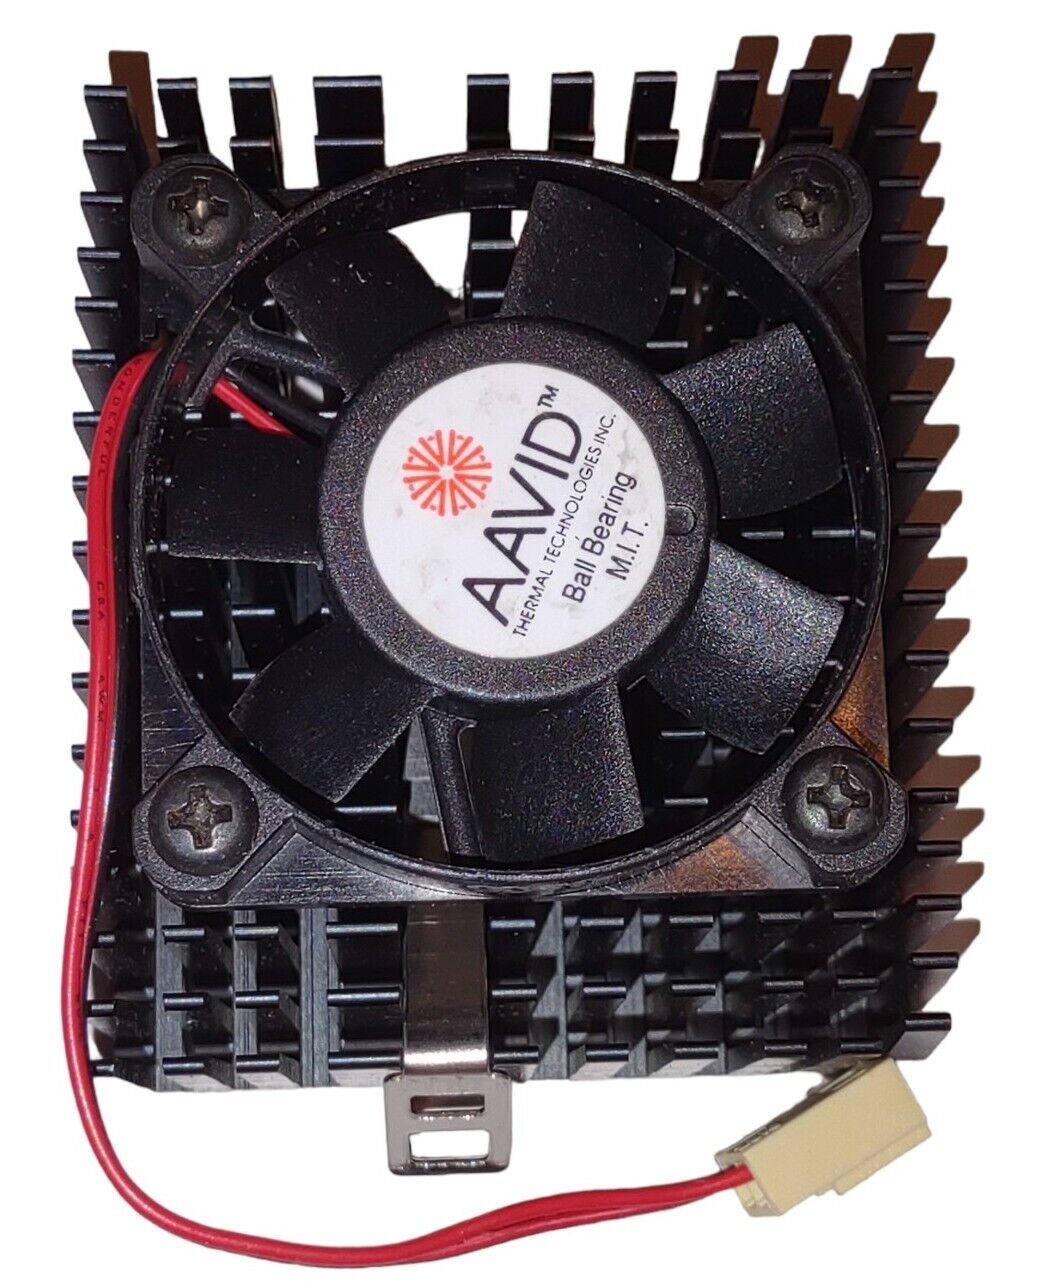 CPU socket 5 7 Cooling Fan Ultra quiet Ball bearin Vintage IBM TANDY CLONE AAVID